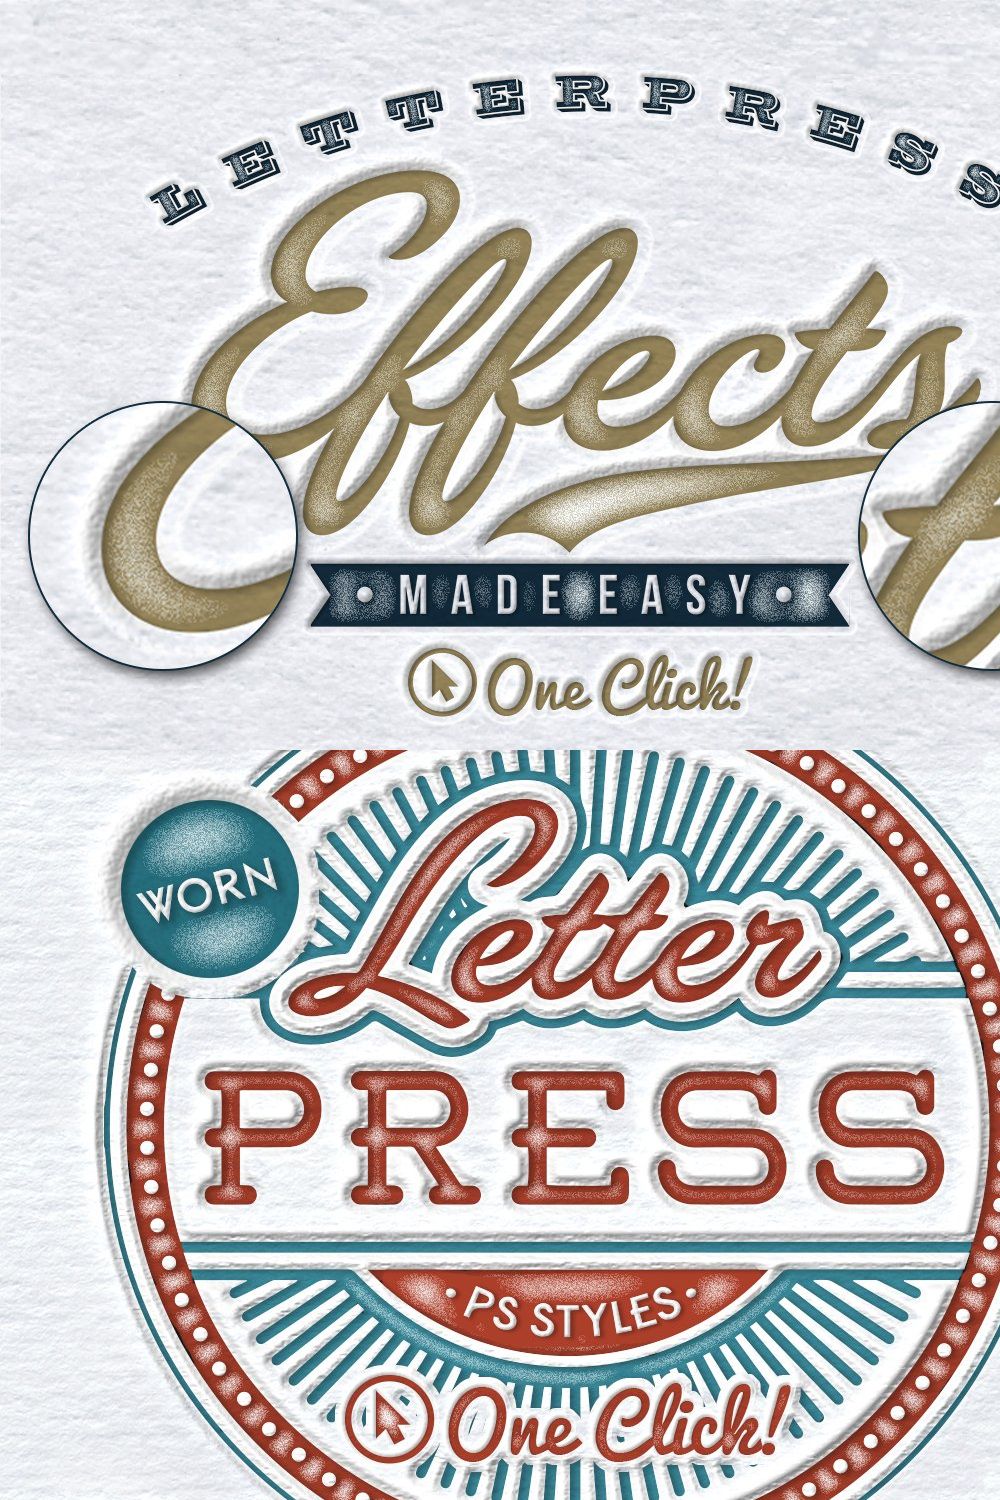 Worn Letterpress Photoshop Styles pinterest preview image.